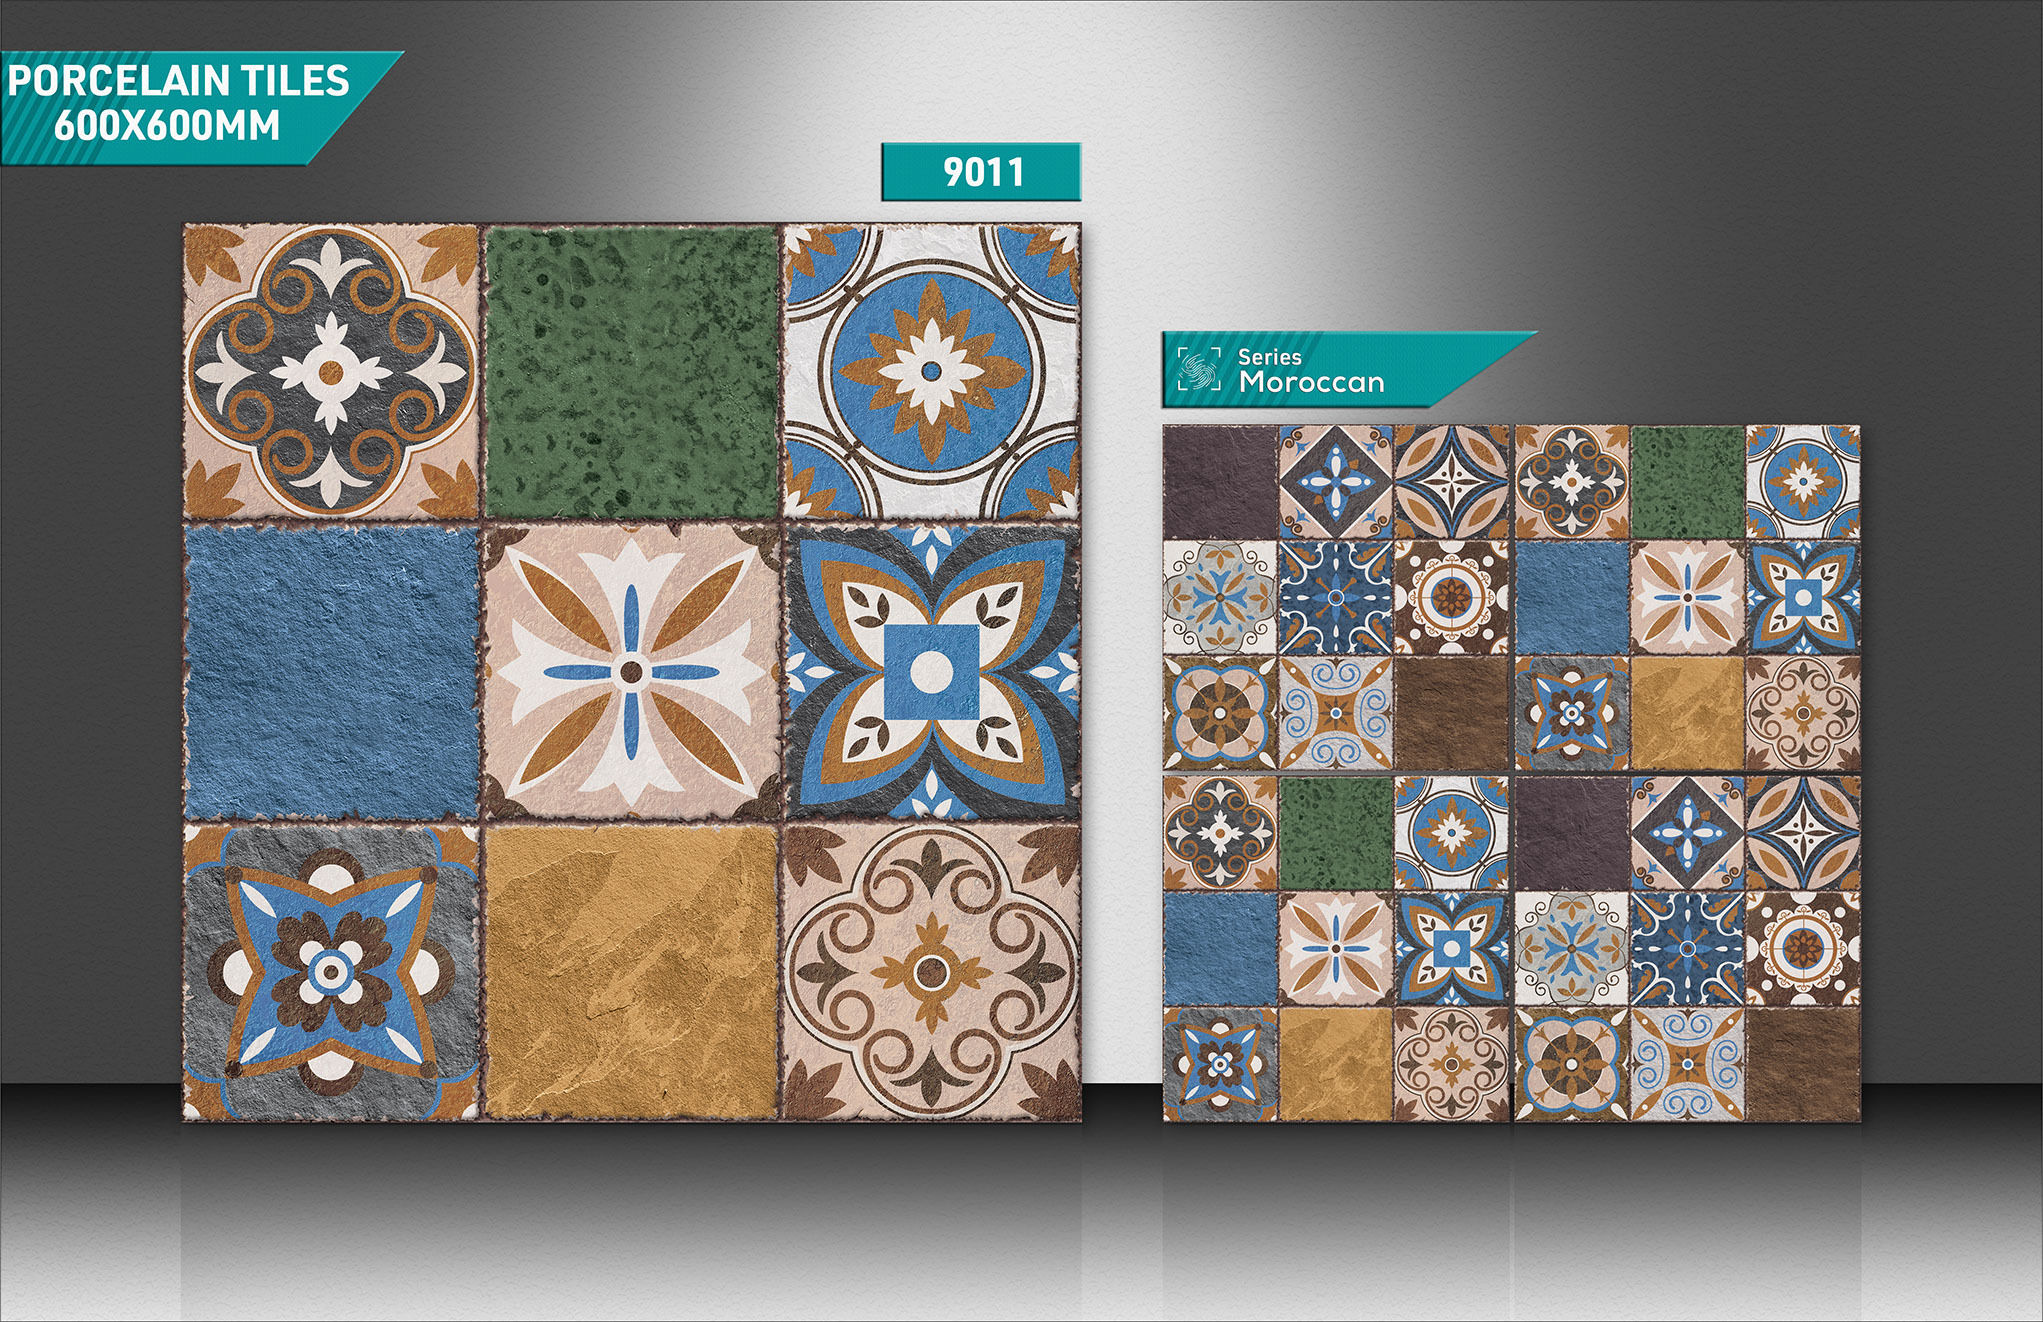 600x600mm Moroccan Porcelain tiles